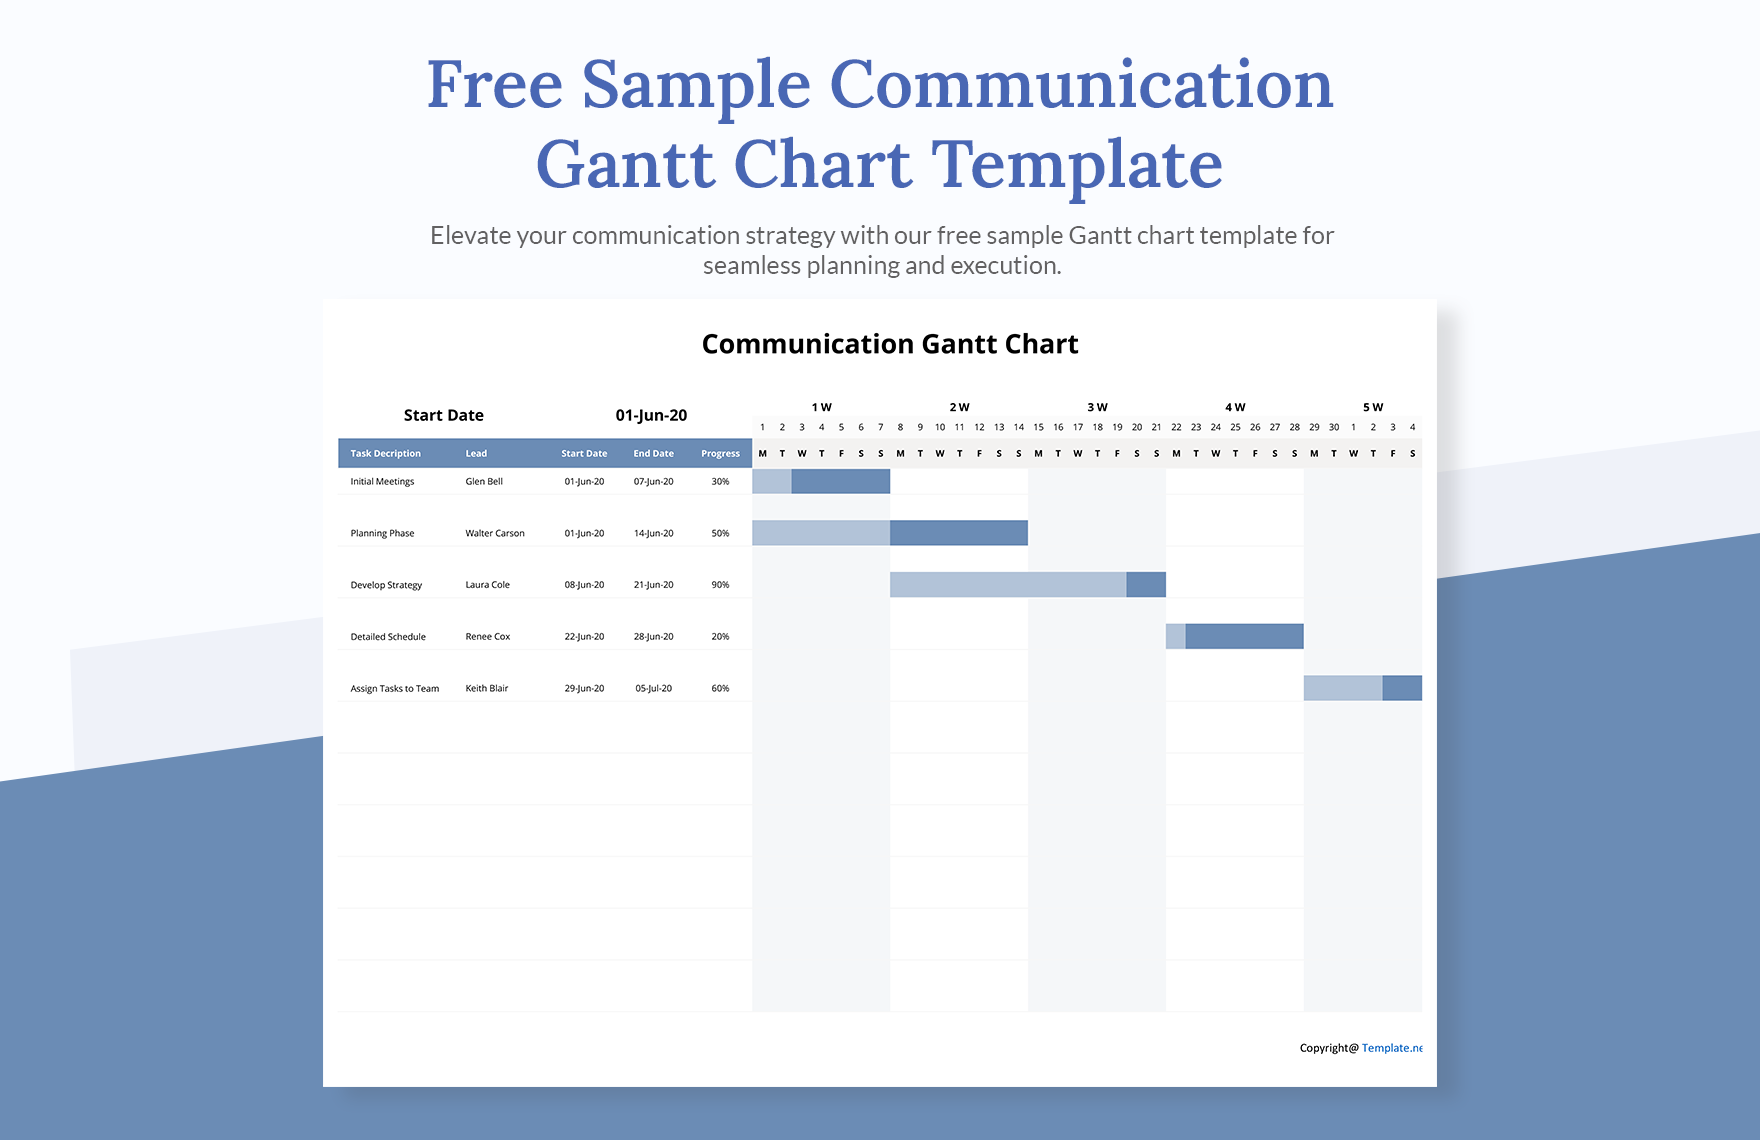 Sample Communication Gantt Chart Template